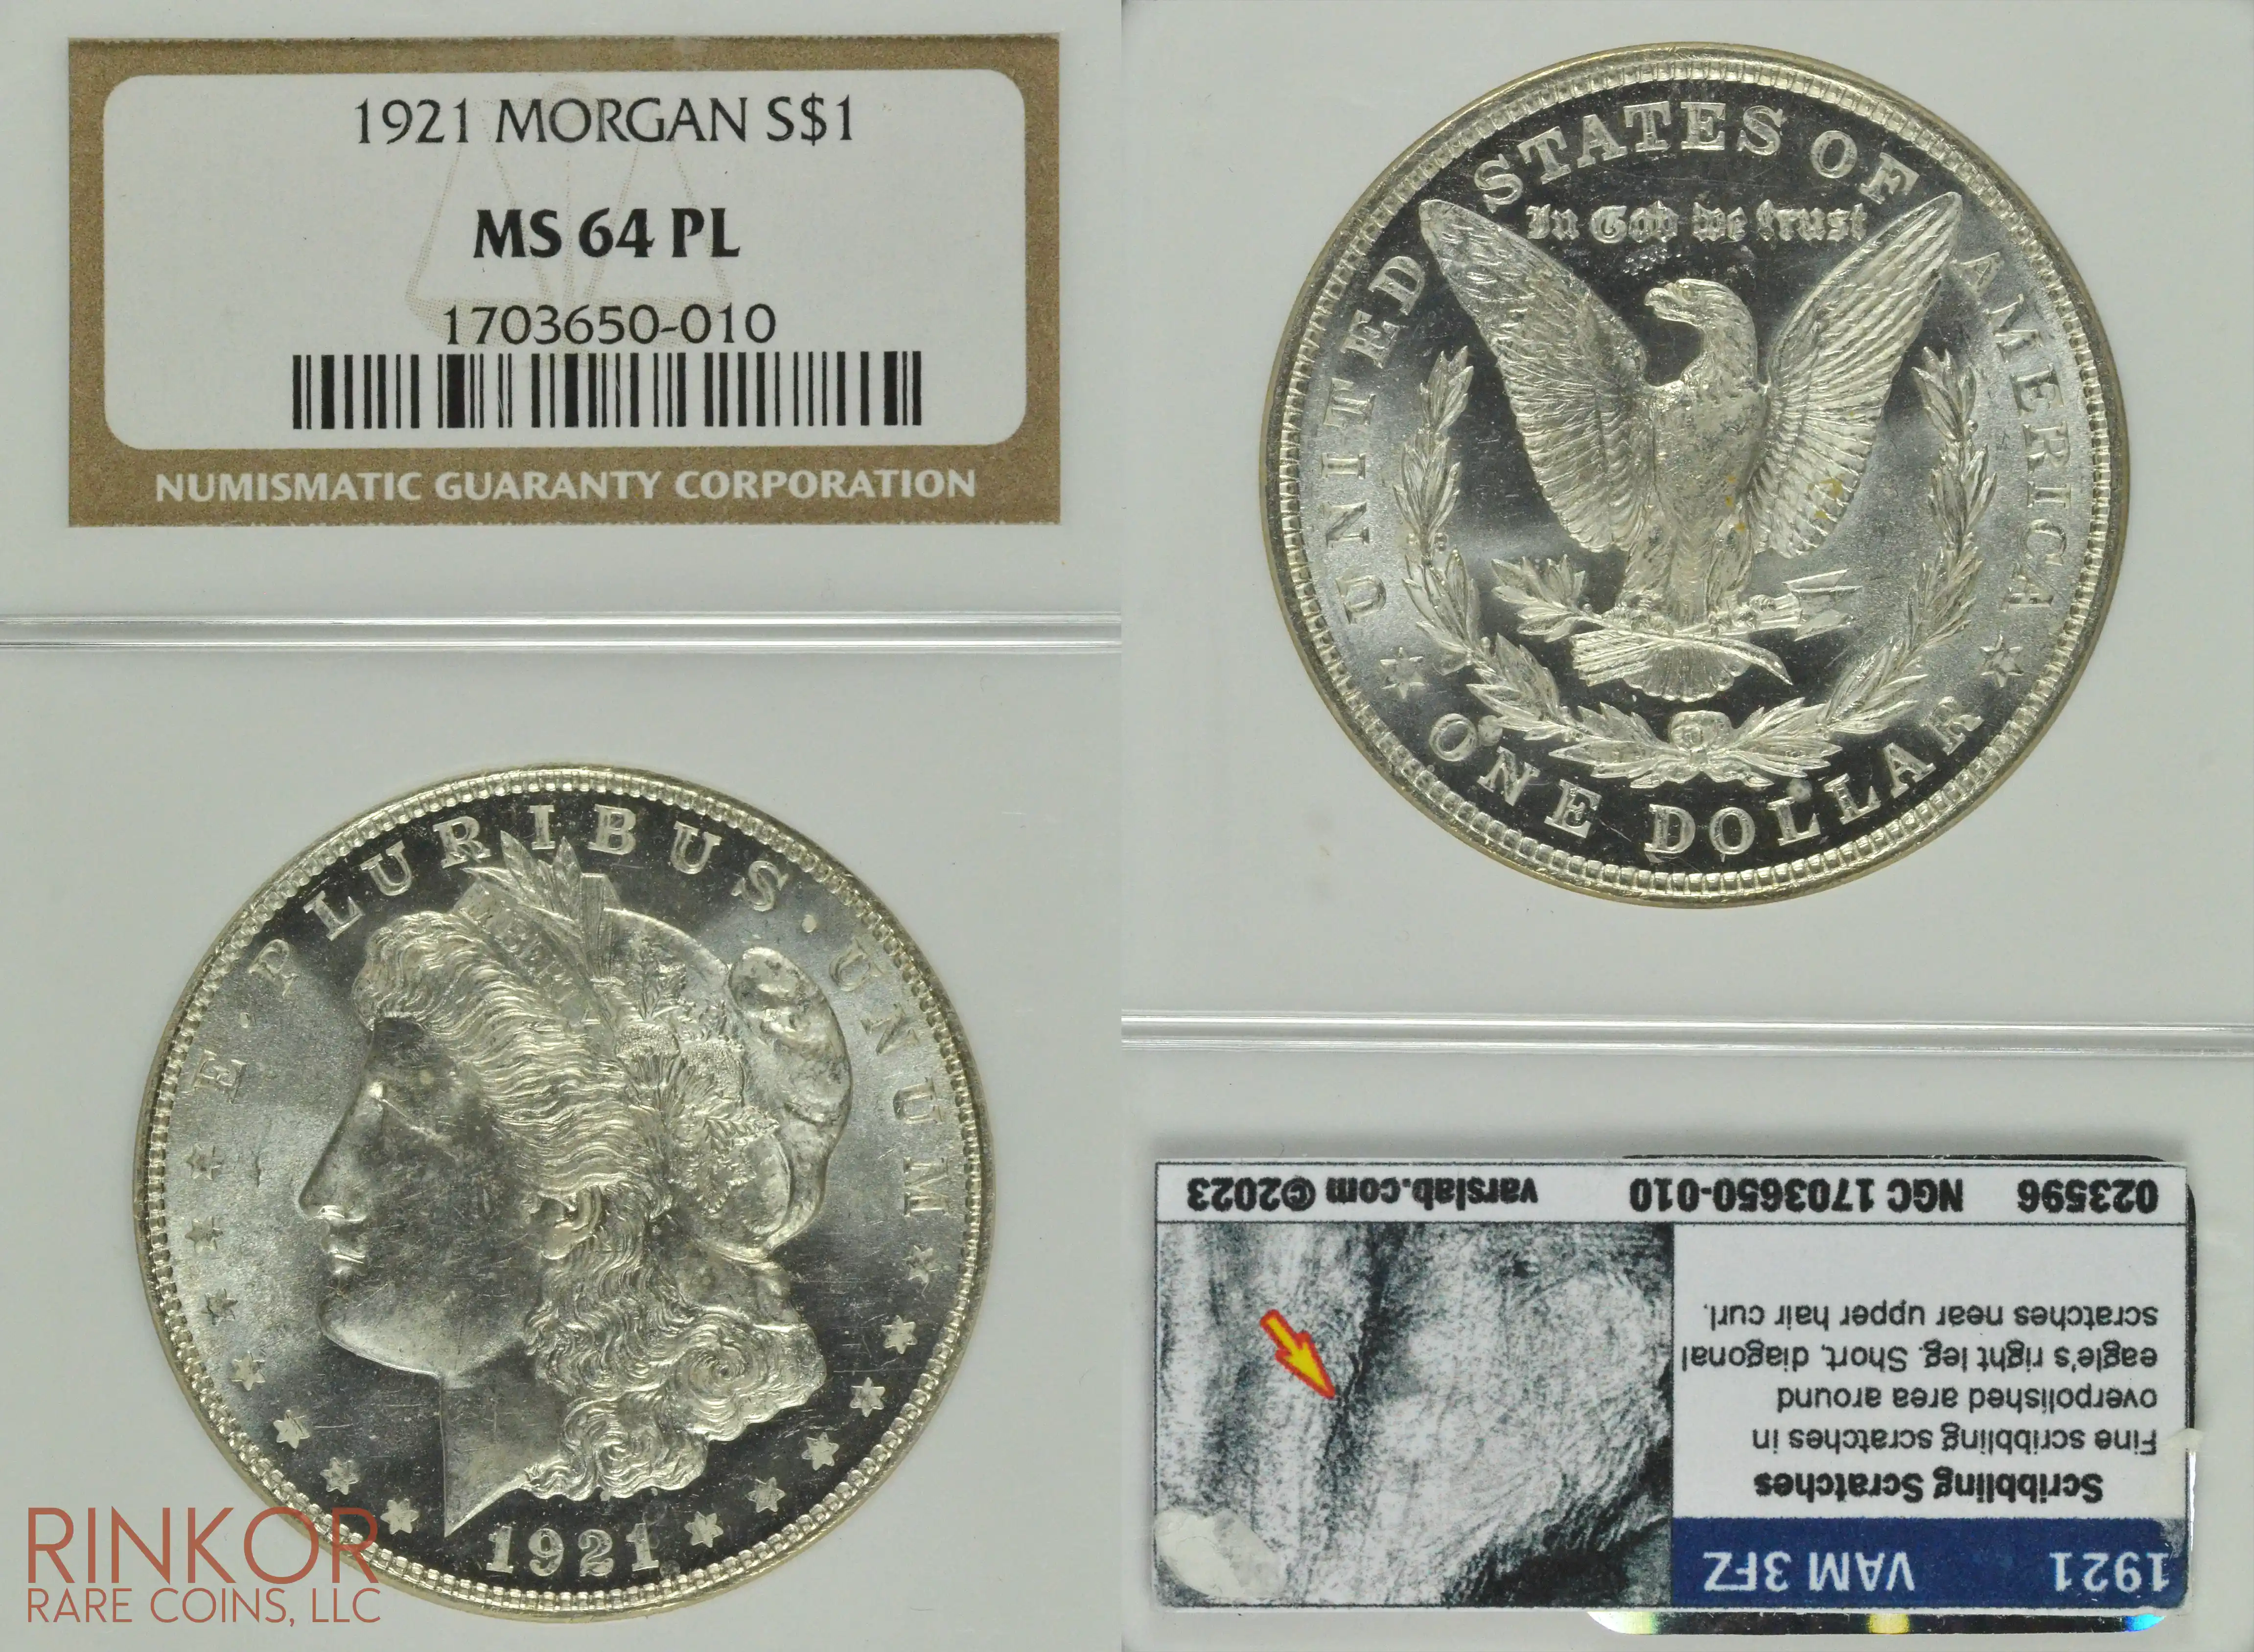 1921 Morgan $1 NGC MS 64 PL